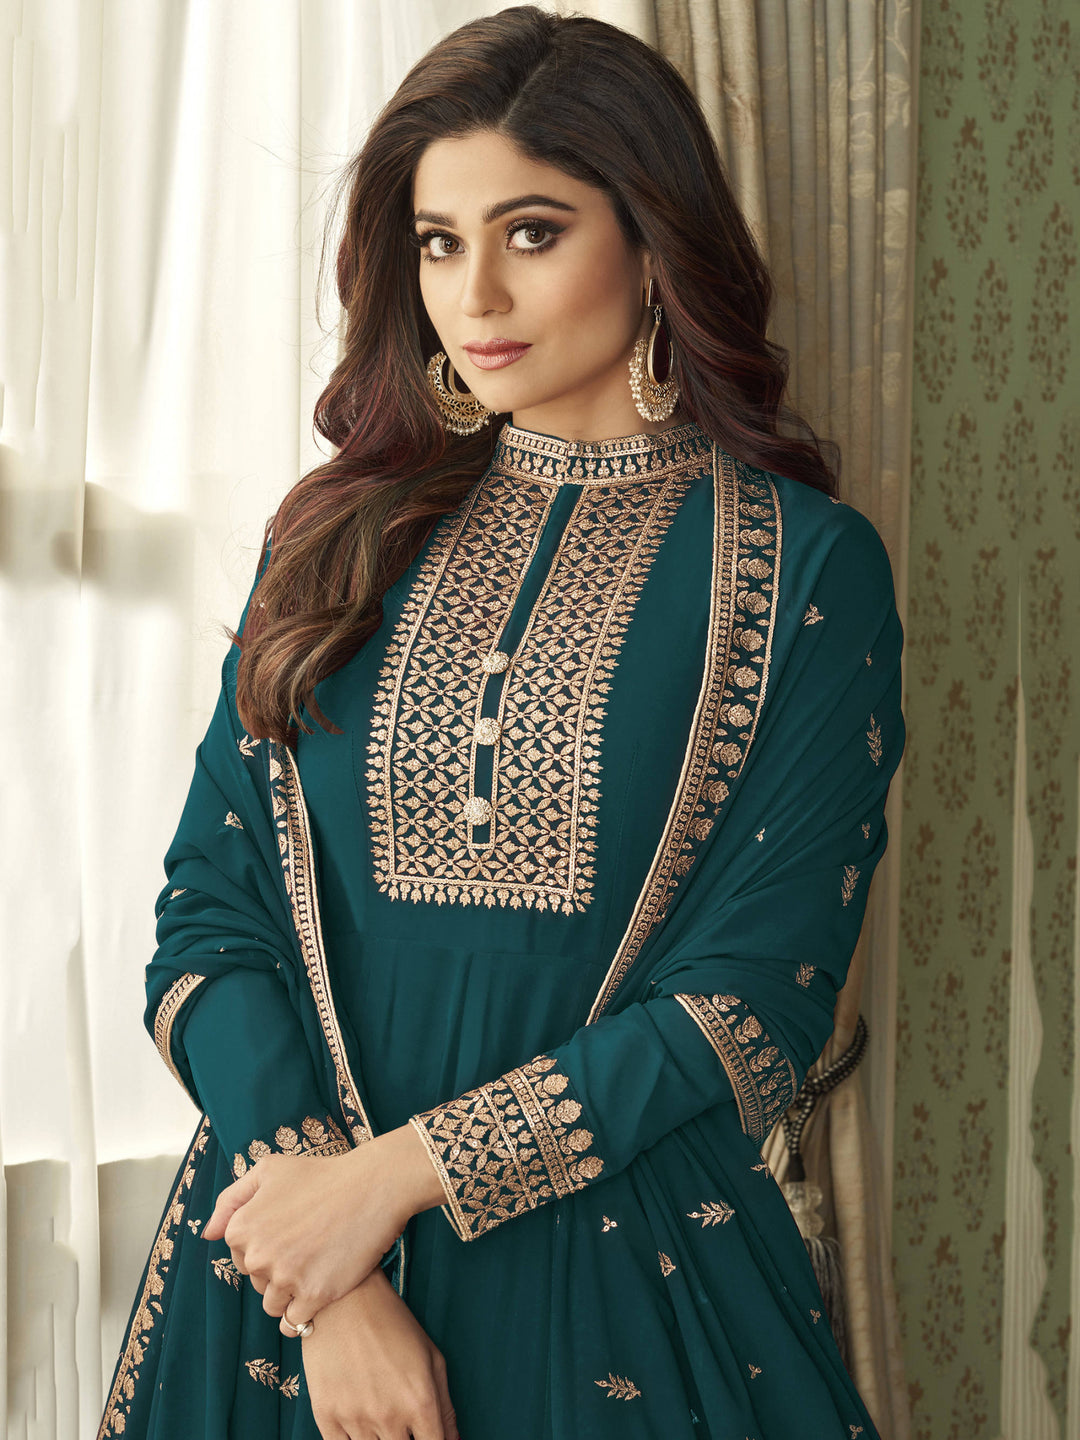 Buy Bollywood Style Teal Blue Anarkali Suit - Featuring Shamita Shetty